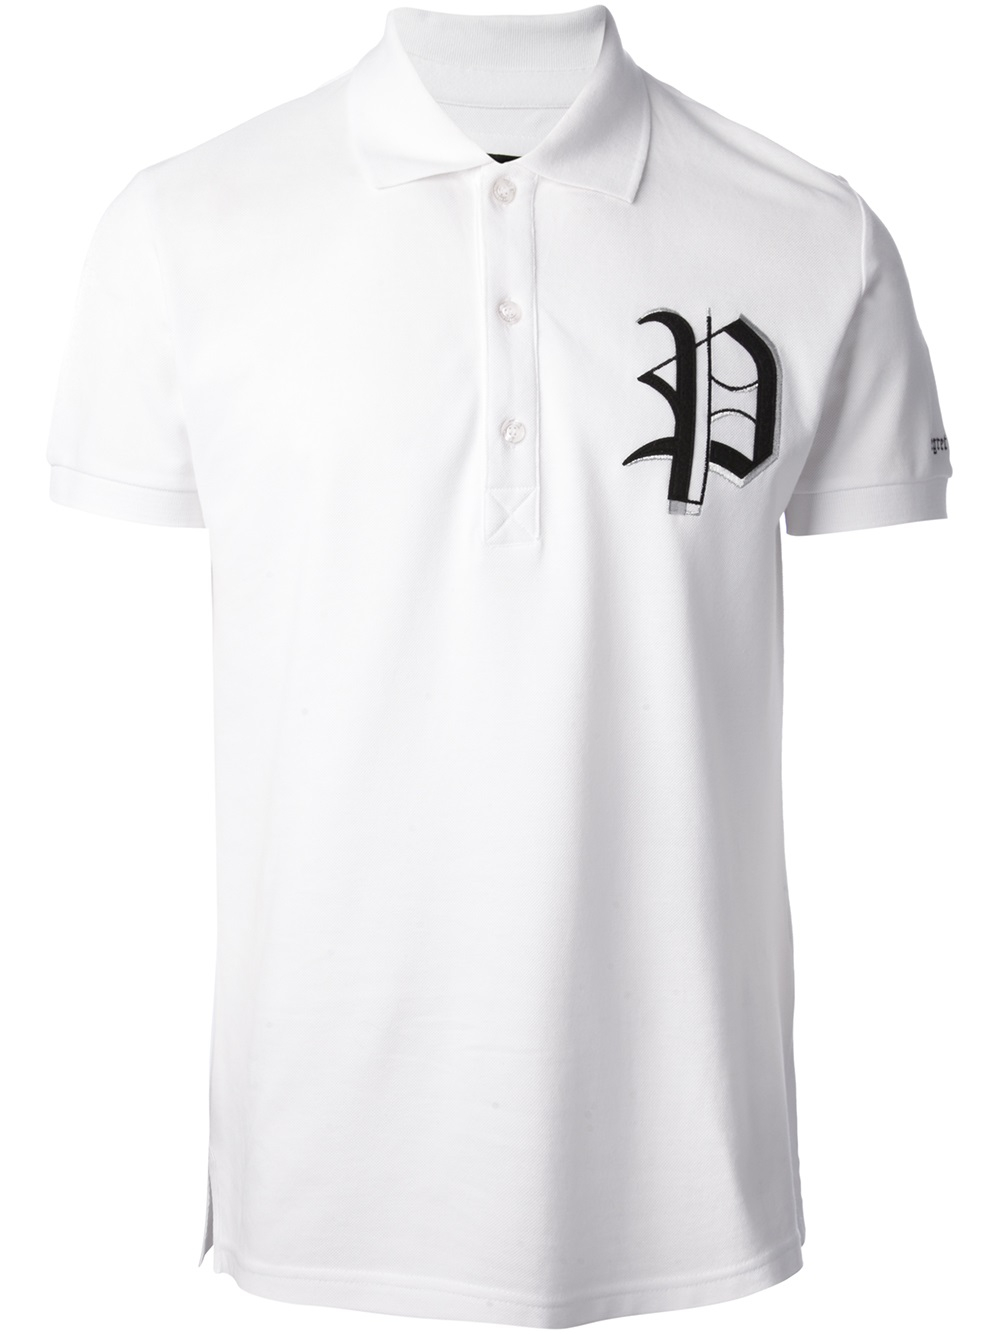 Philipp Plein Embroidered Logo Polo Shirt in White for Men - Lyst